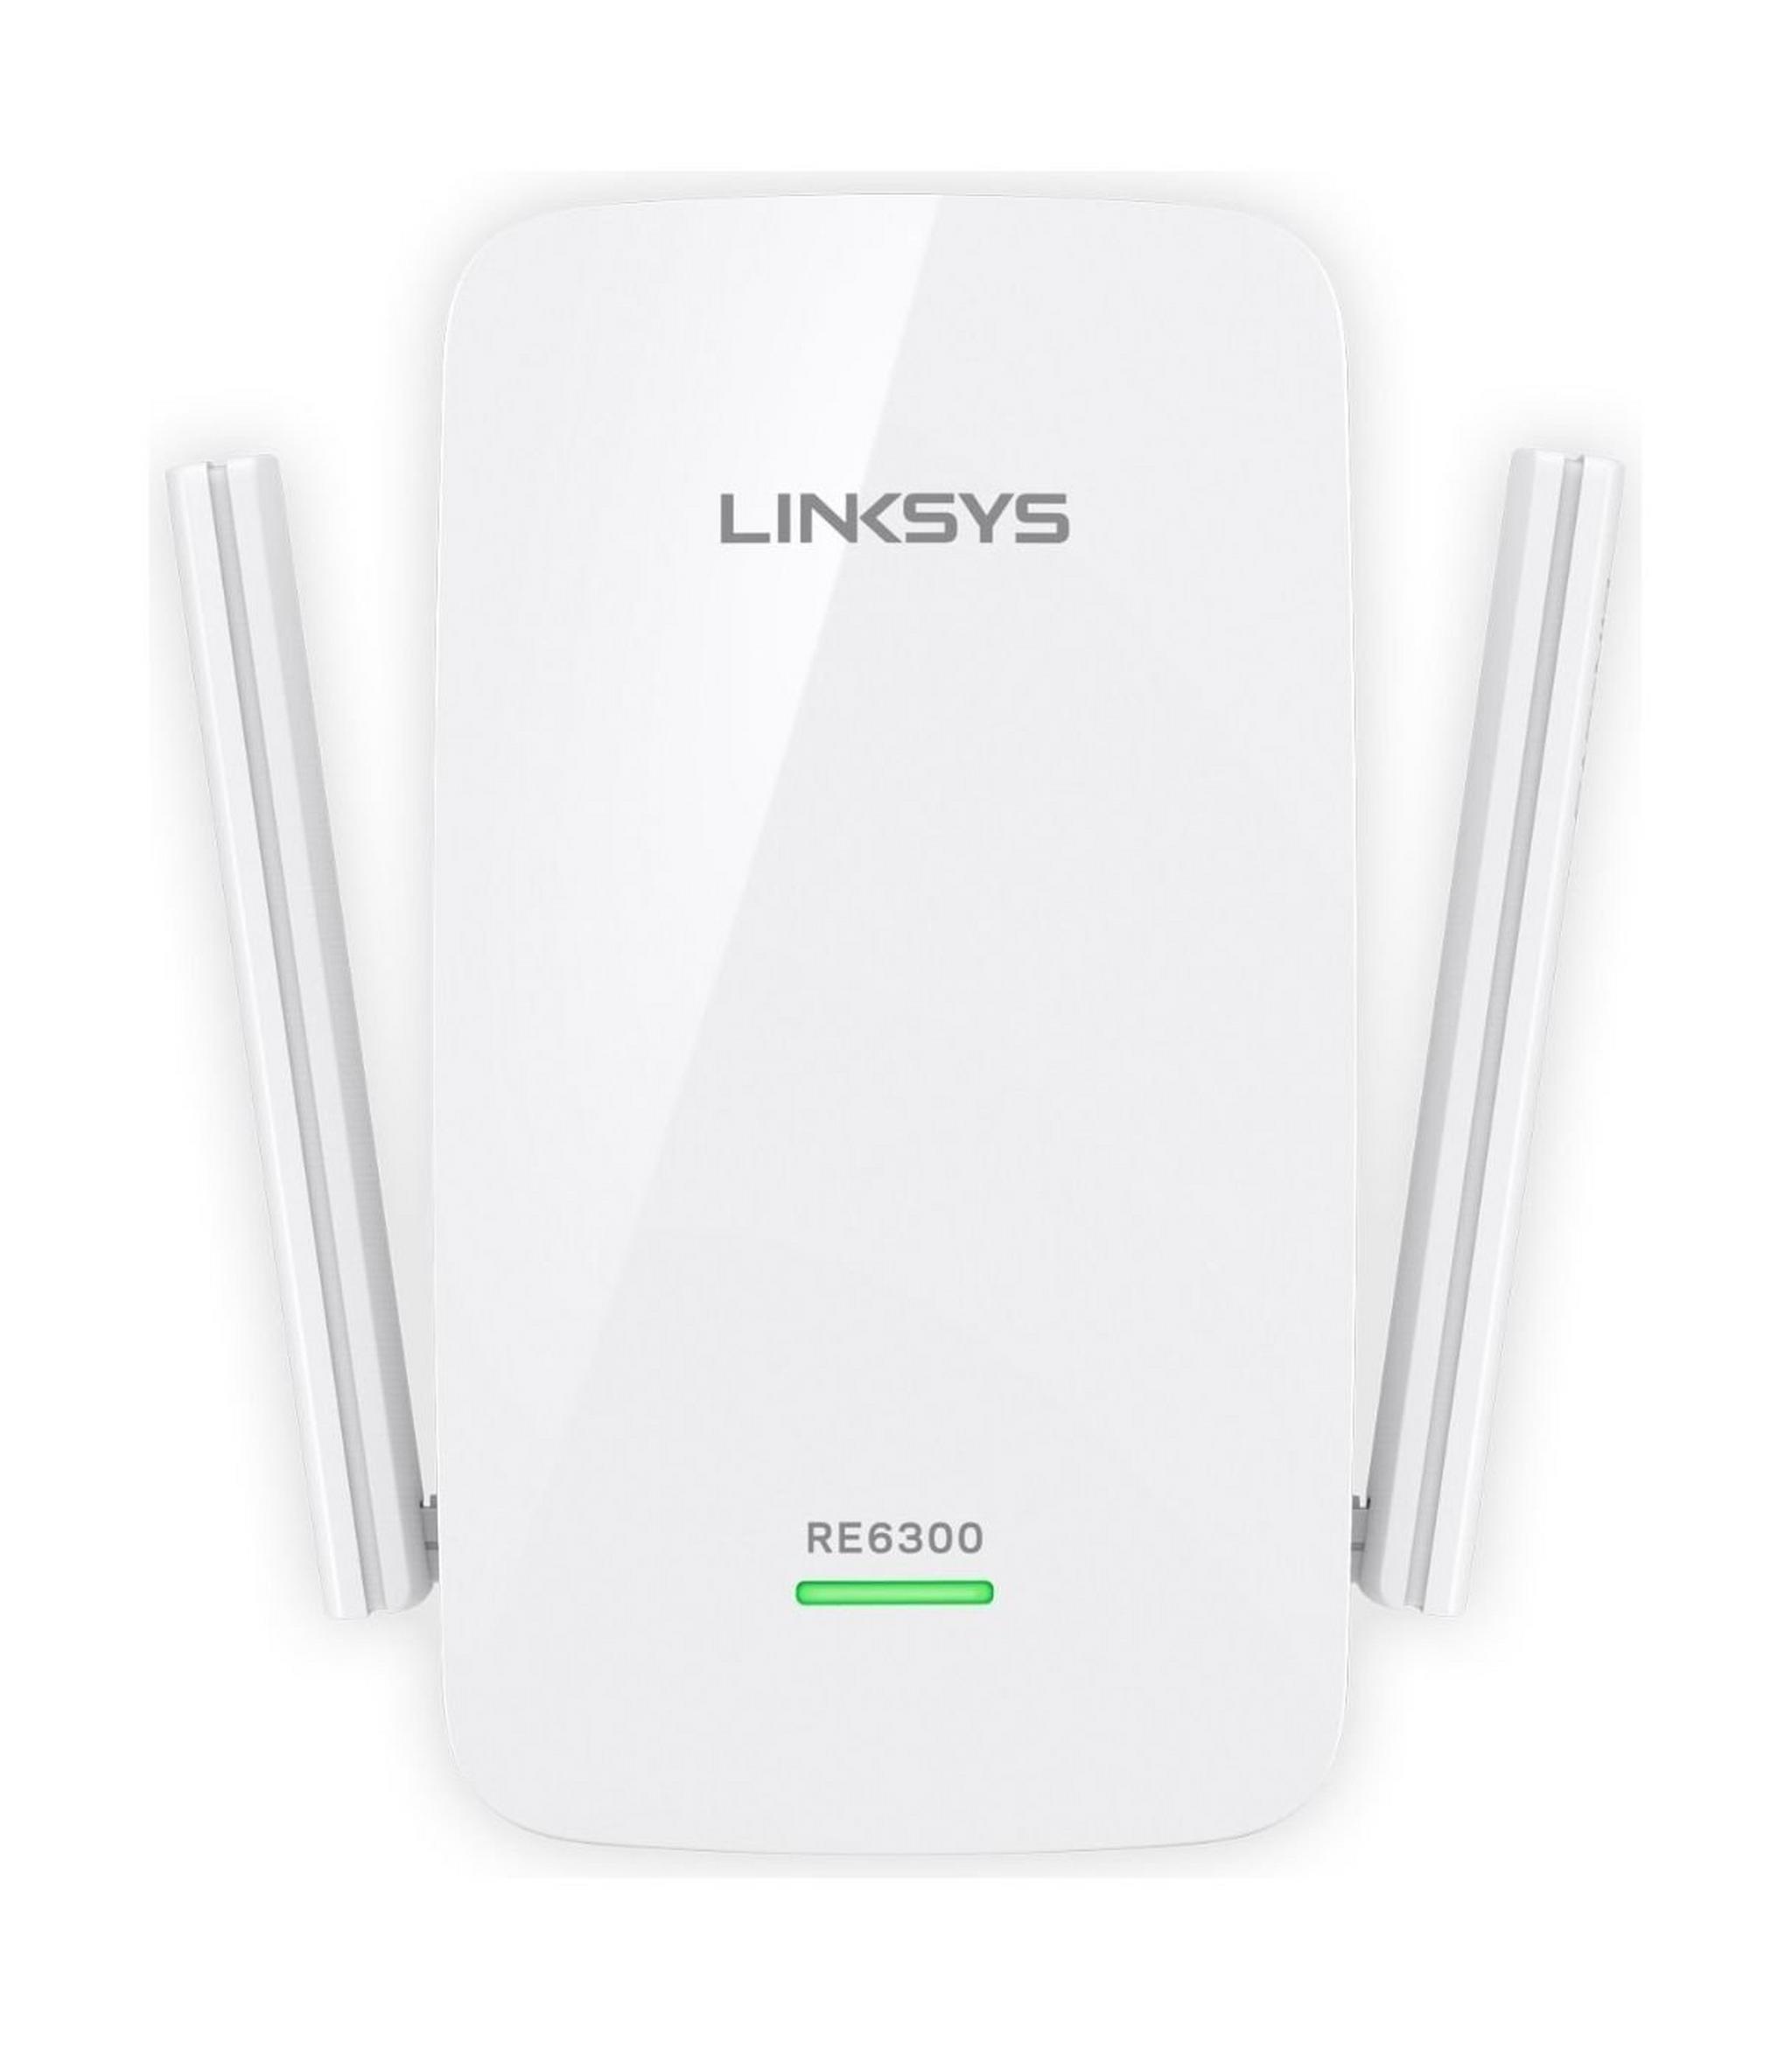 Linksys RE6300 AC750 BOOST Wi-Fi Range Extender - White